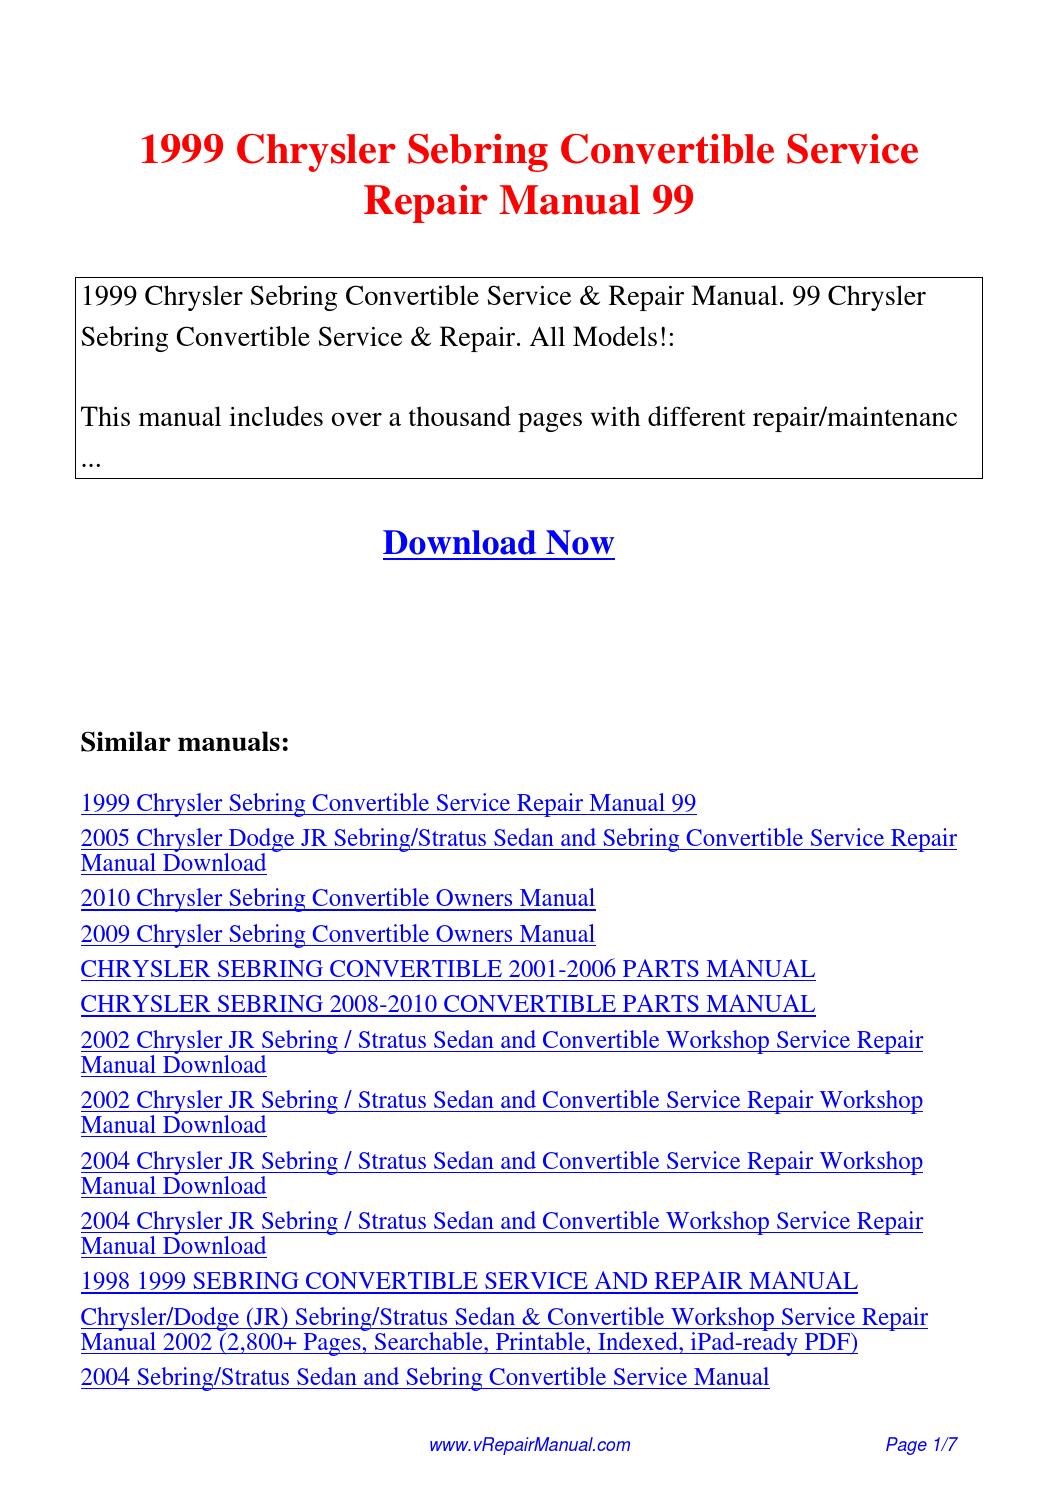 2005 Dodge Stratus Service Manual Download